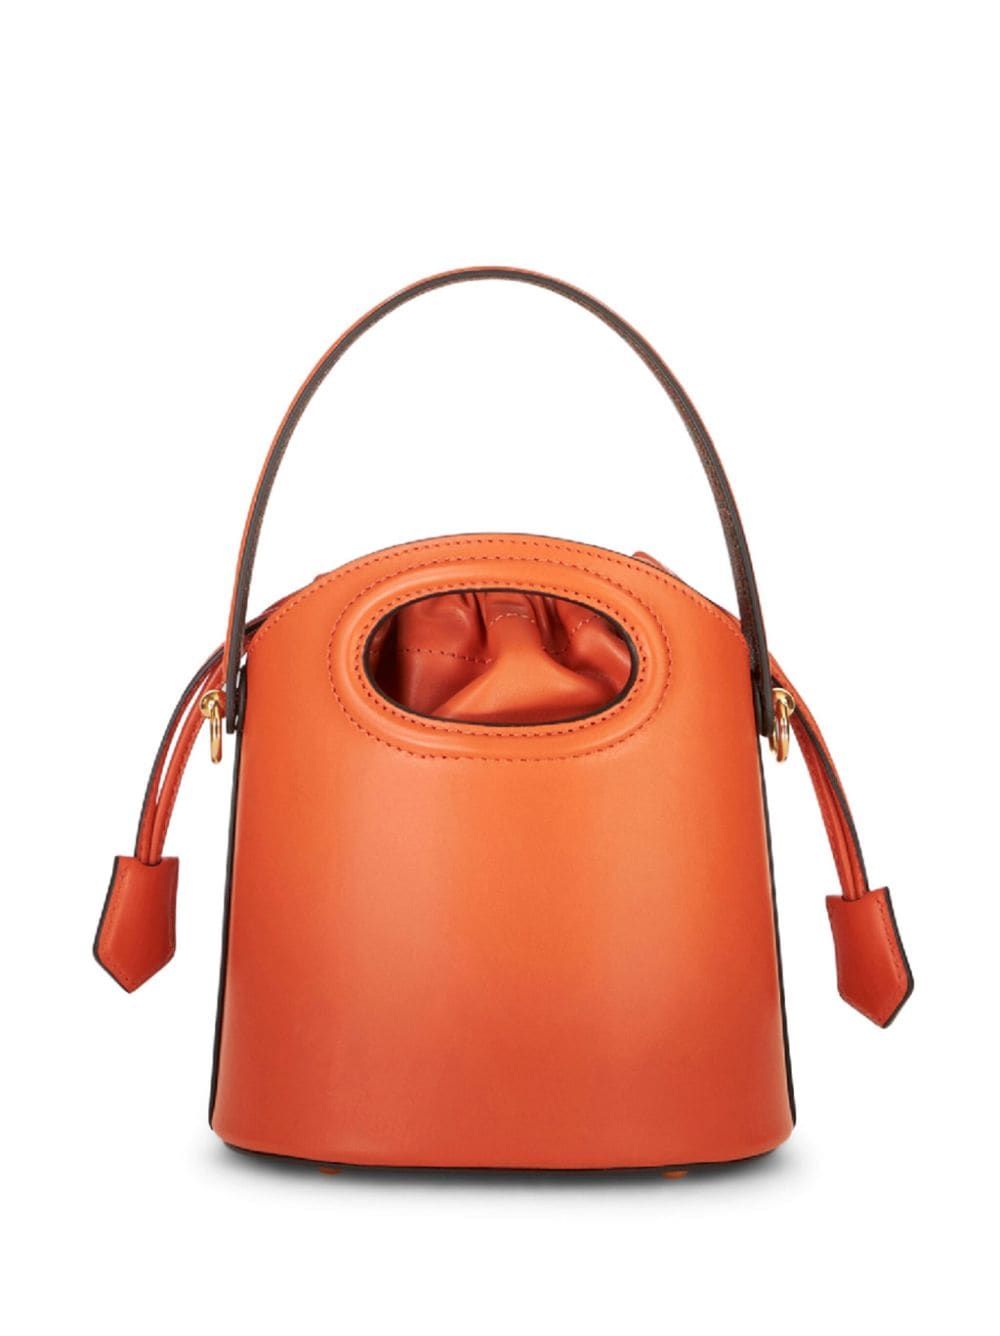 ETRO Mini Saturno Bucket Handbag in Orange Lamb Leather with Paisley Motif and Gold-Tone Hardware - 18x18.5 cm